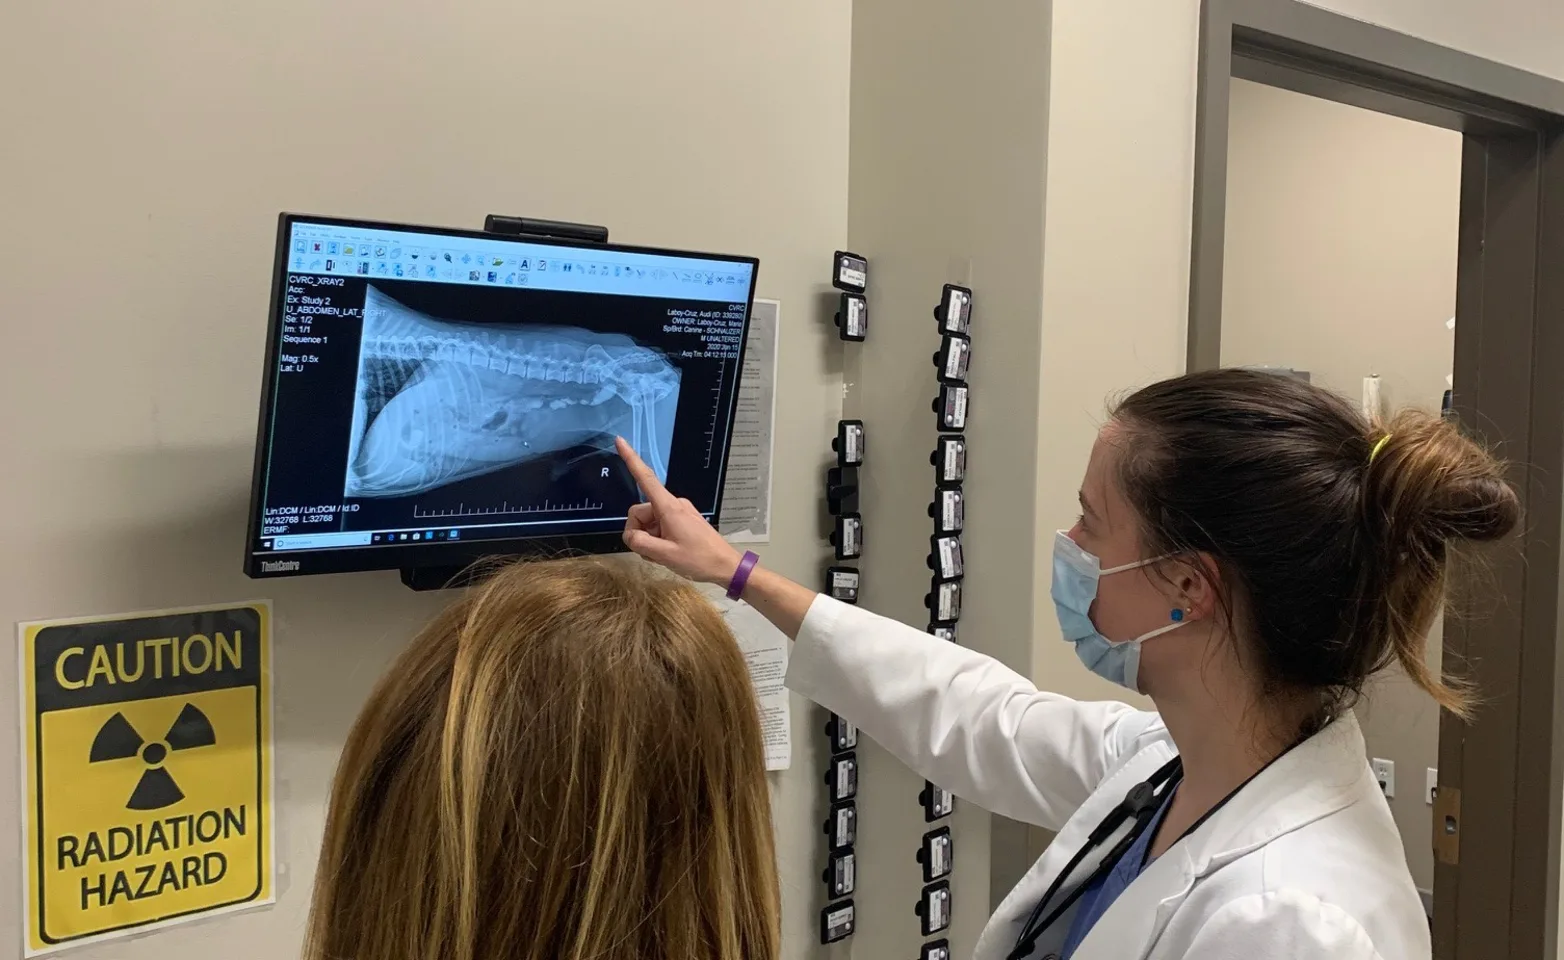 2 staff members examine an x-ray